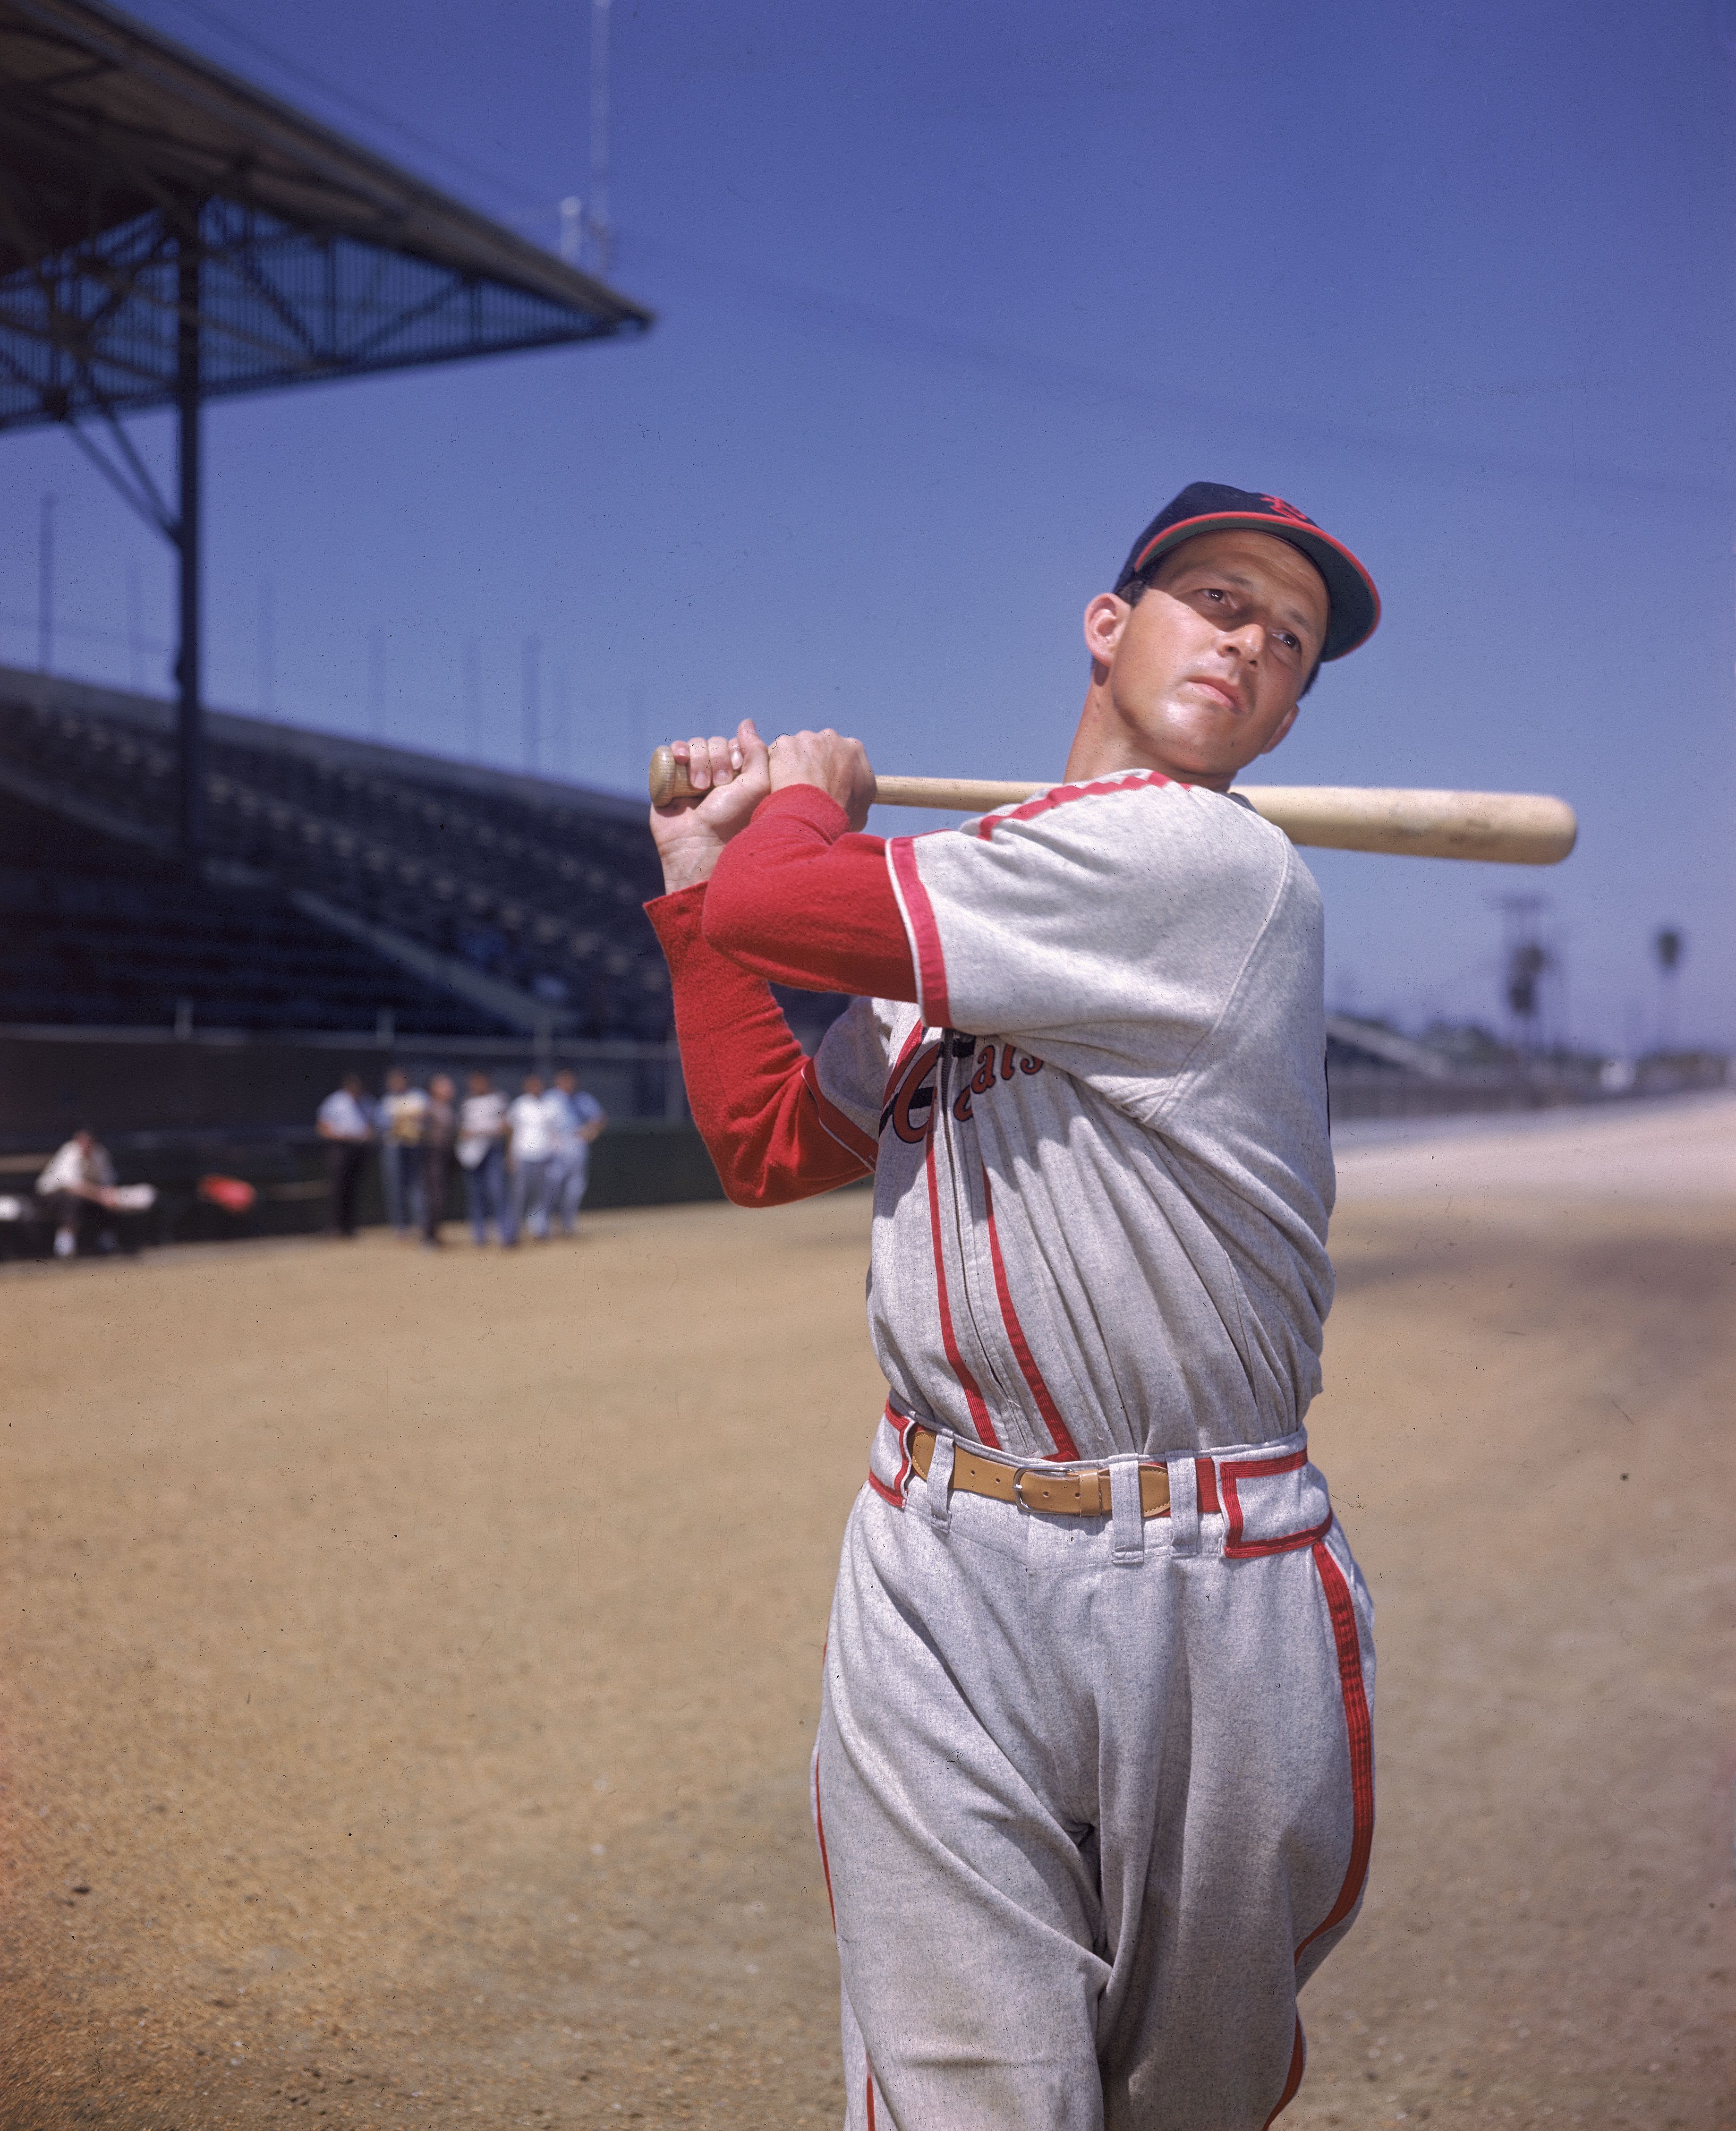 Baseball in Wartime - Stan Musial